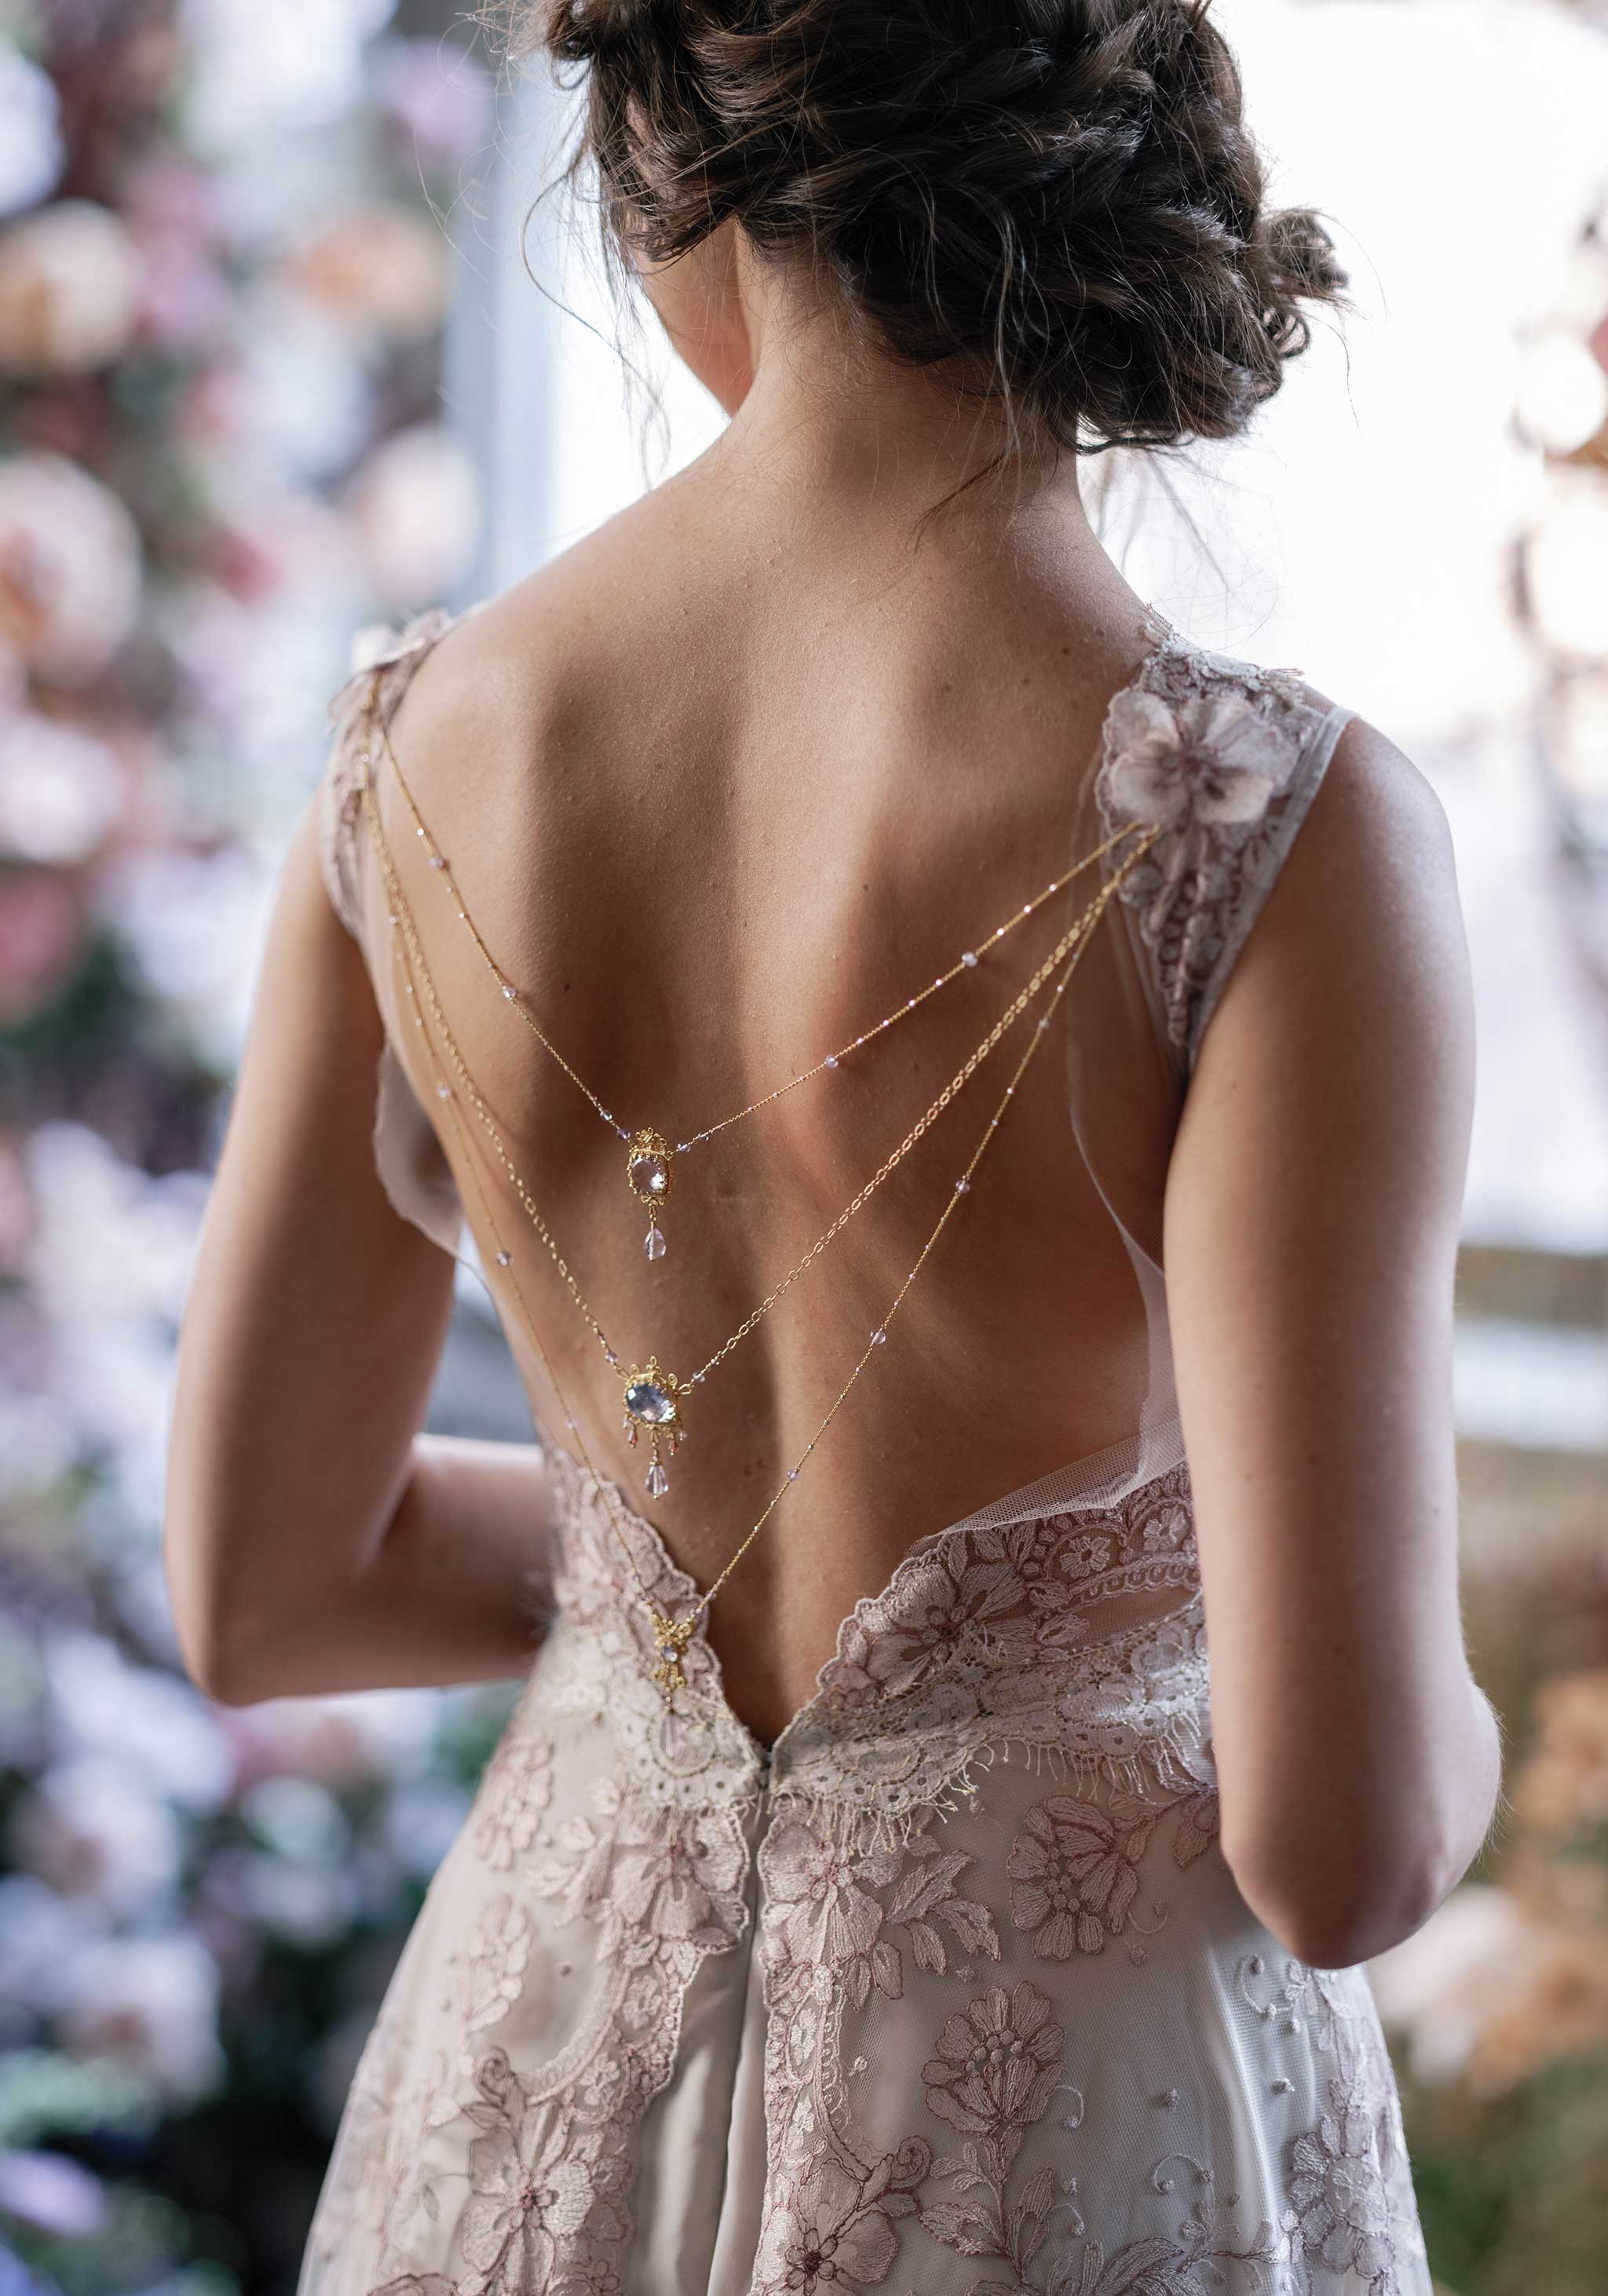 Jenifer's Custom Modest Wedding Dress - Strut Bridal Salon